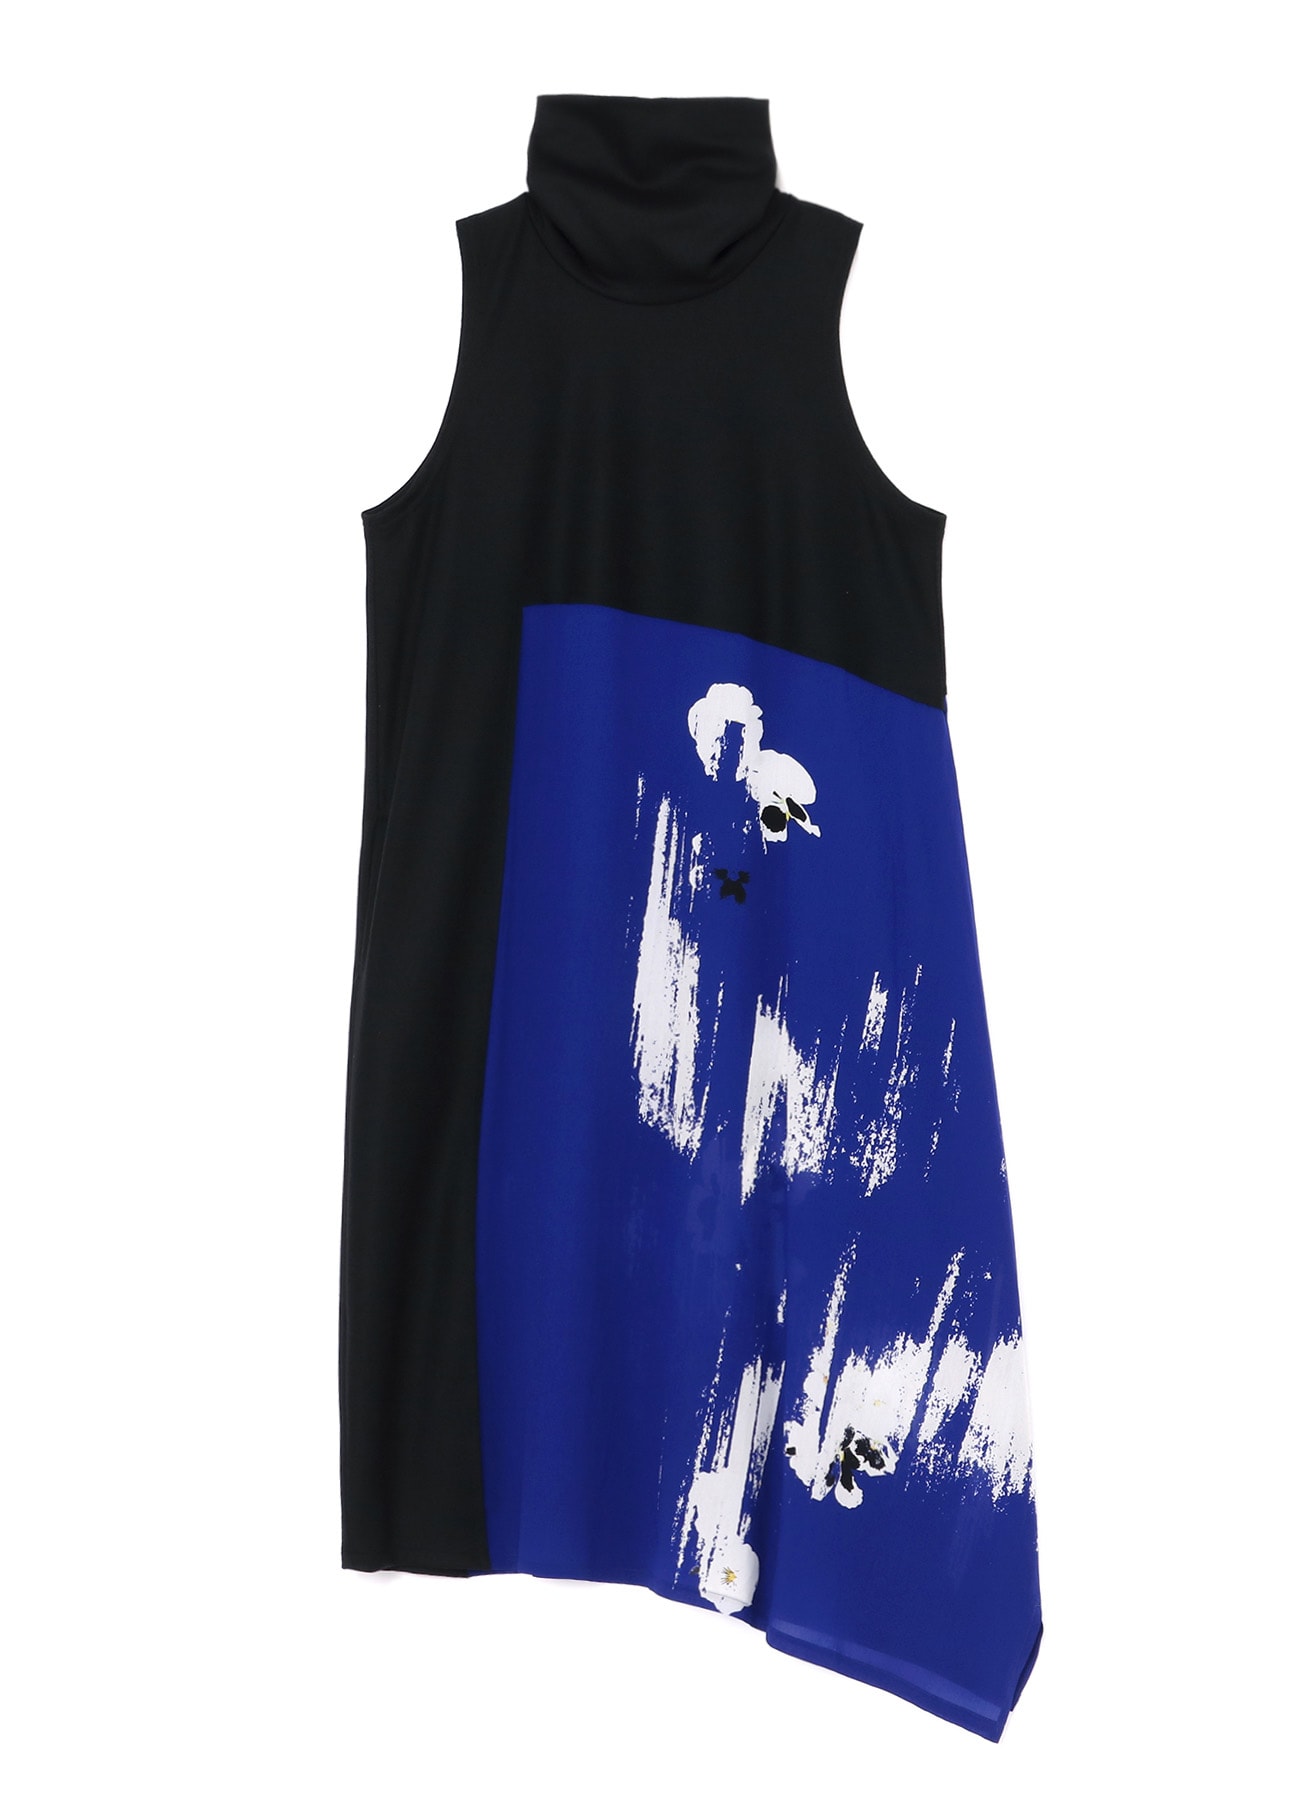 BLURRED PANSY PRINT SLEEVELESS TURTLENECK DRESS(XS Blue): Vintage